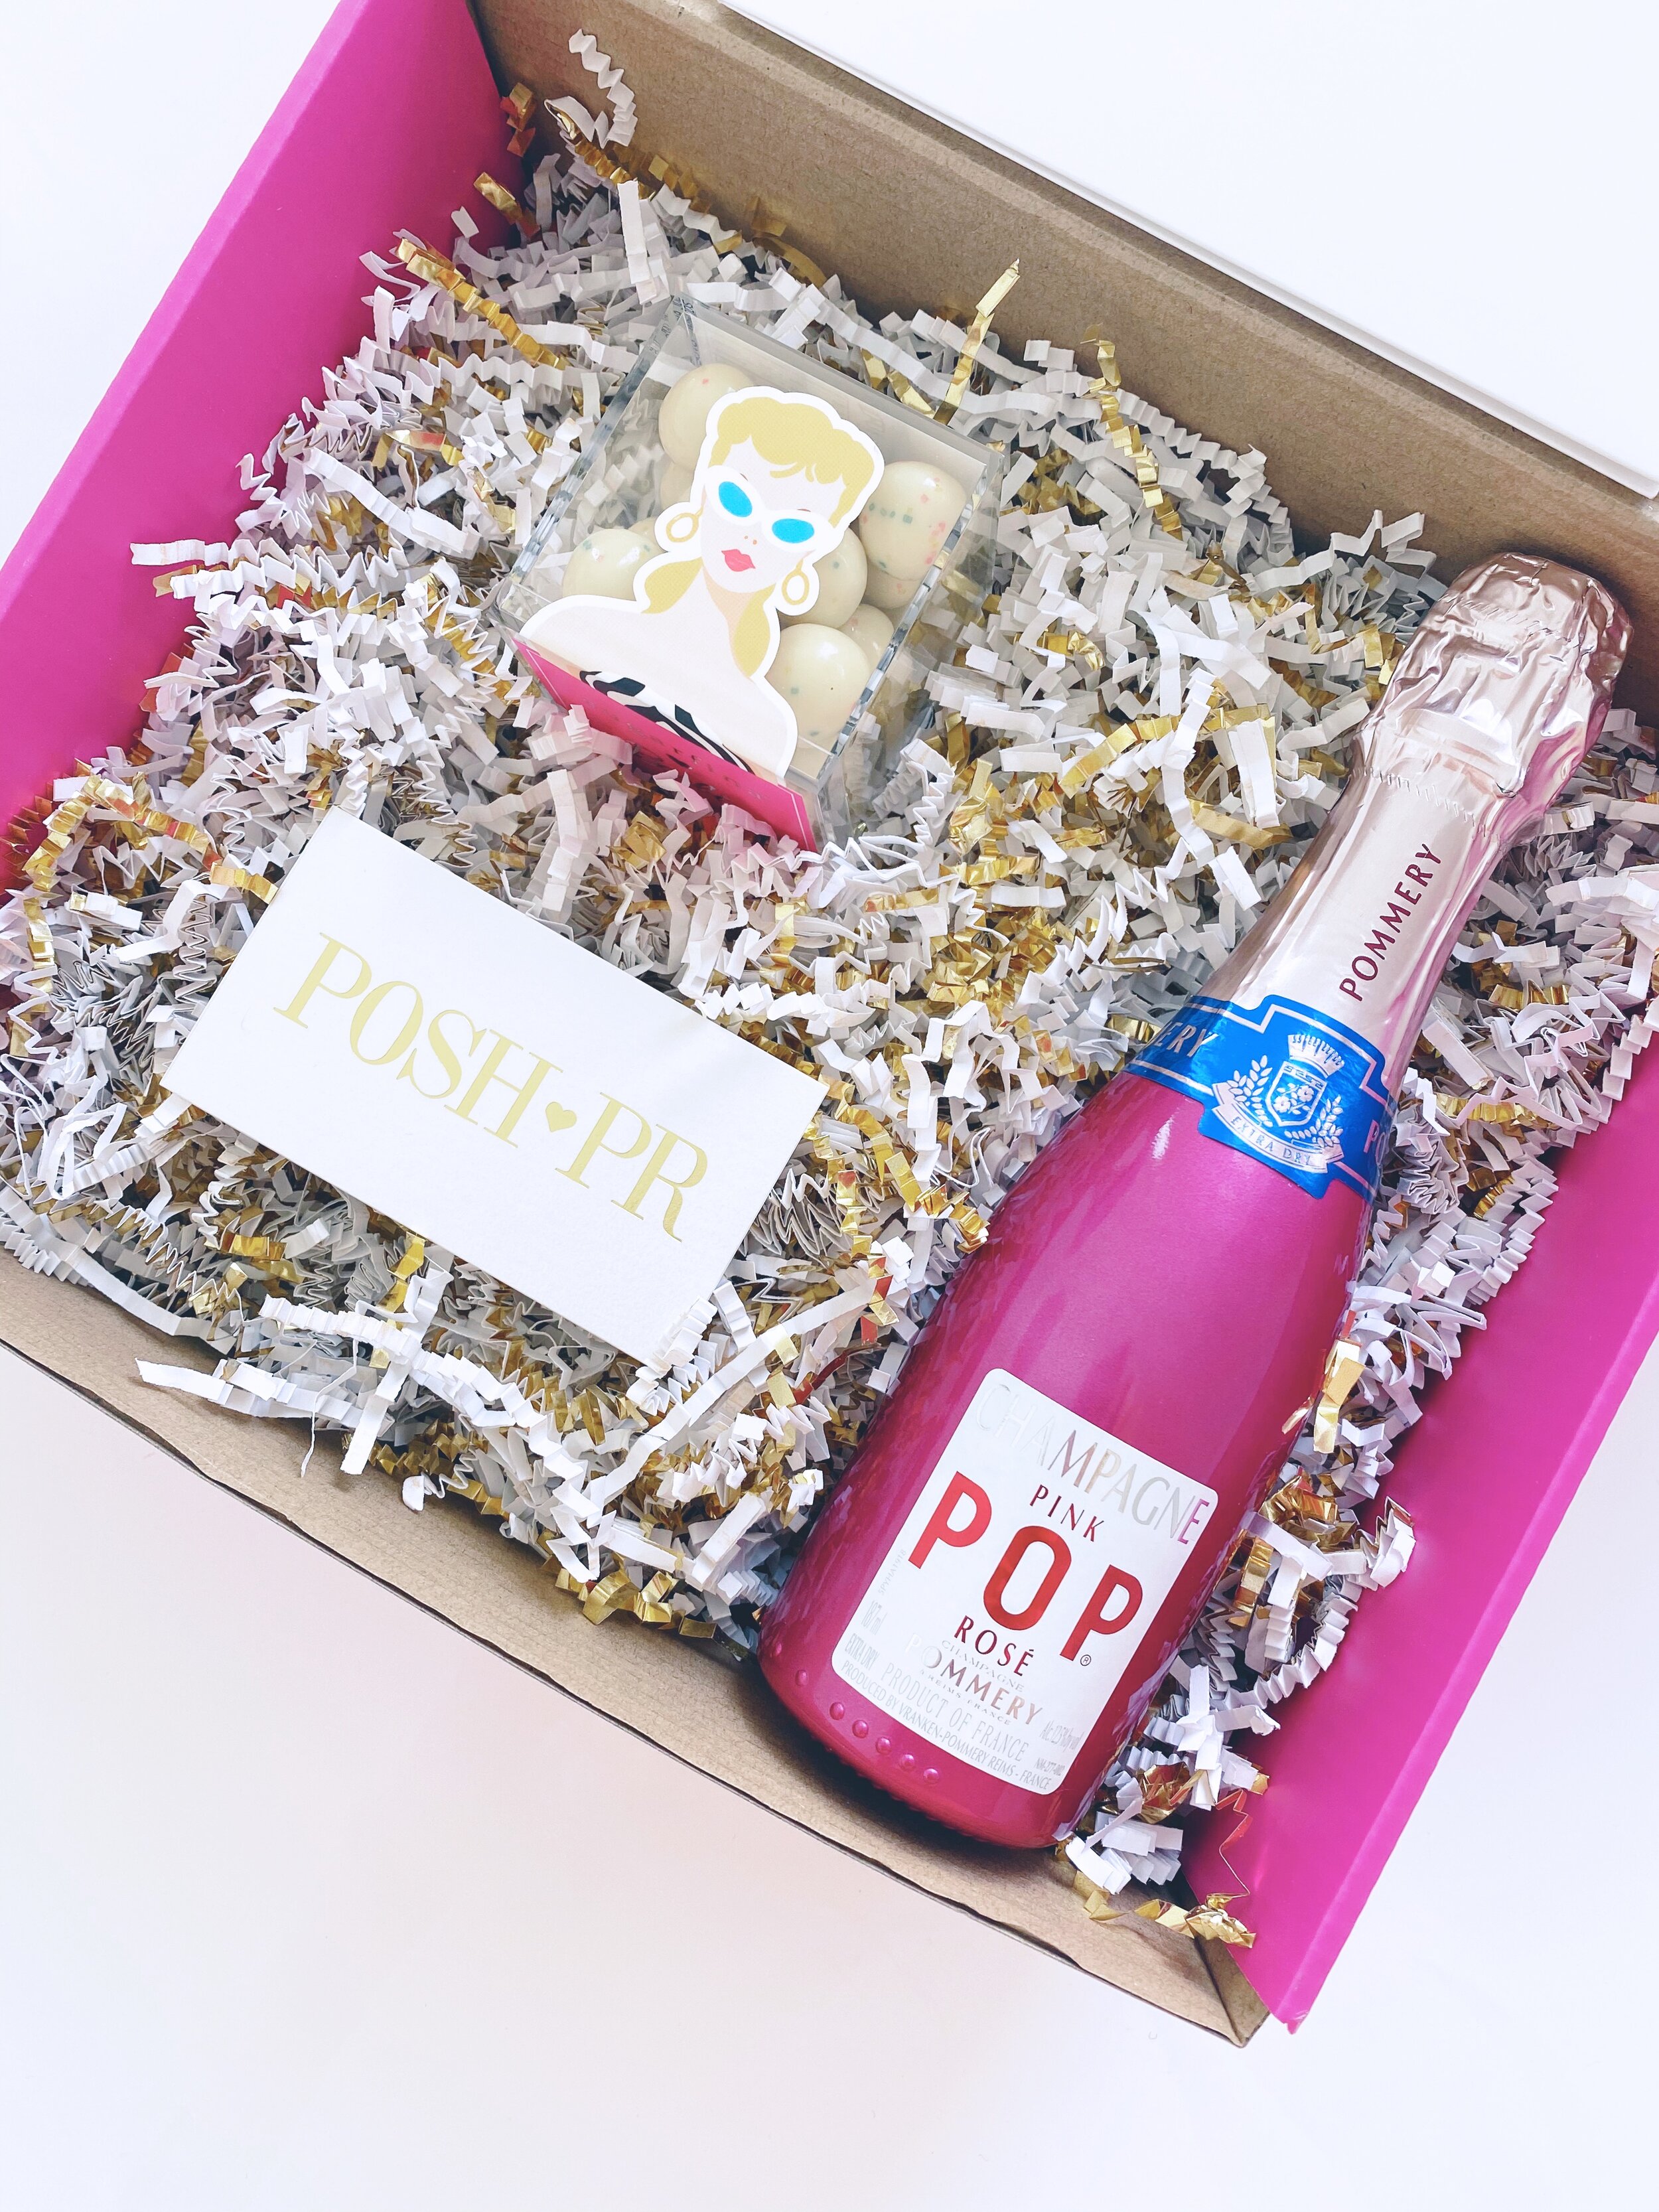 POSH-PR-Blog-Press-Kit-Pretty-Pink-Packages-Elevated-Details-Champagne-Sugarfina-Bows-Social-Media-Agency-Luxury-Branding-Branded-Packing-1.JPG